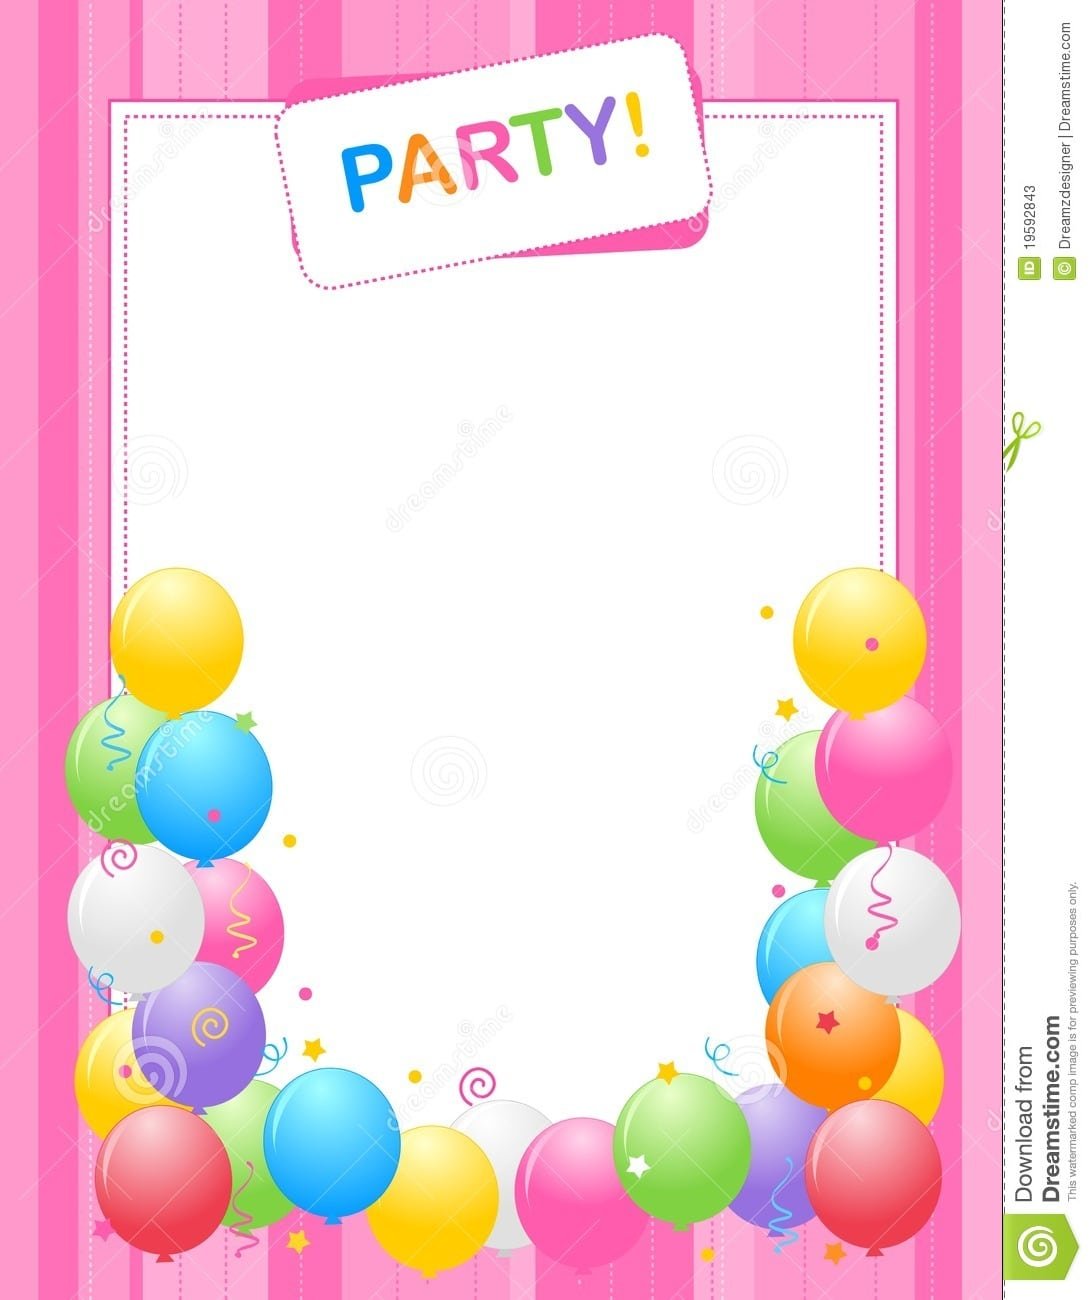 Party Invitation Background Stock Photos